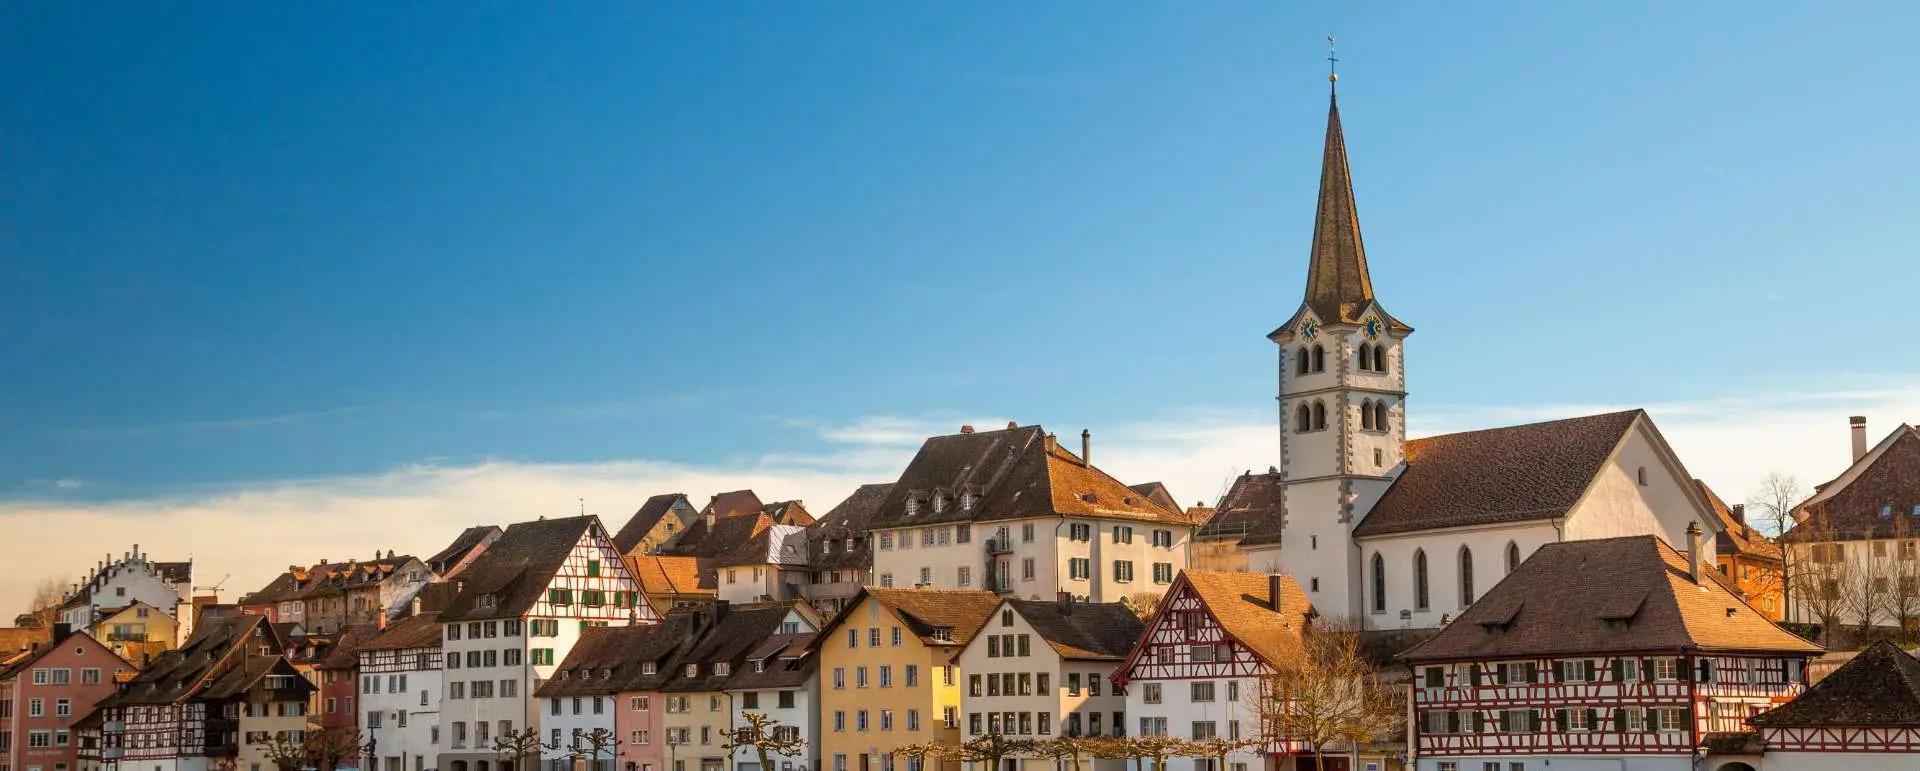 Thurgau - the destination for bus trips